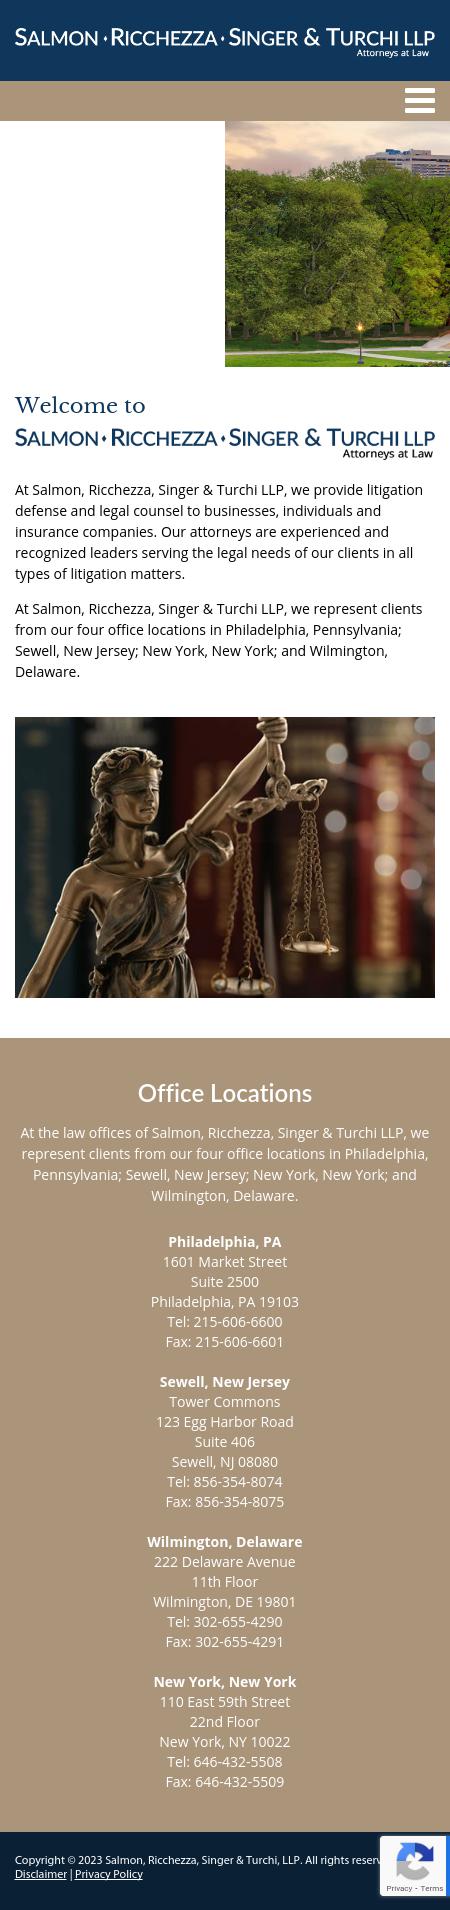 Salmon, Ricchezza, Singer & Turchi, LLP - New York NY Lawyers